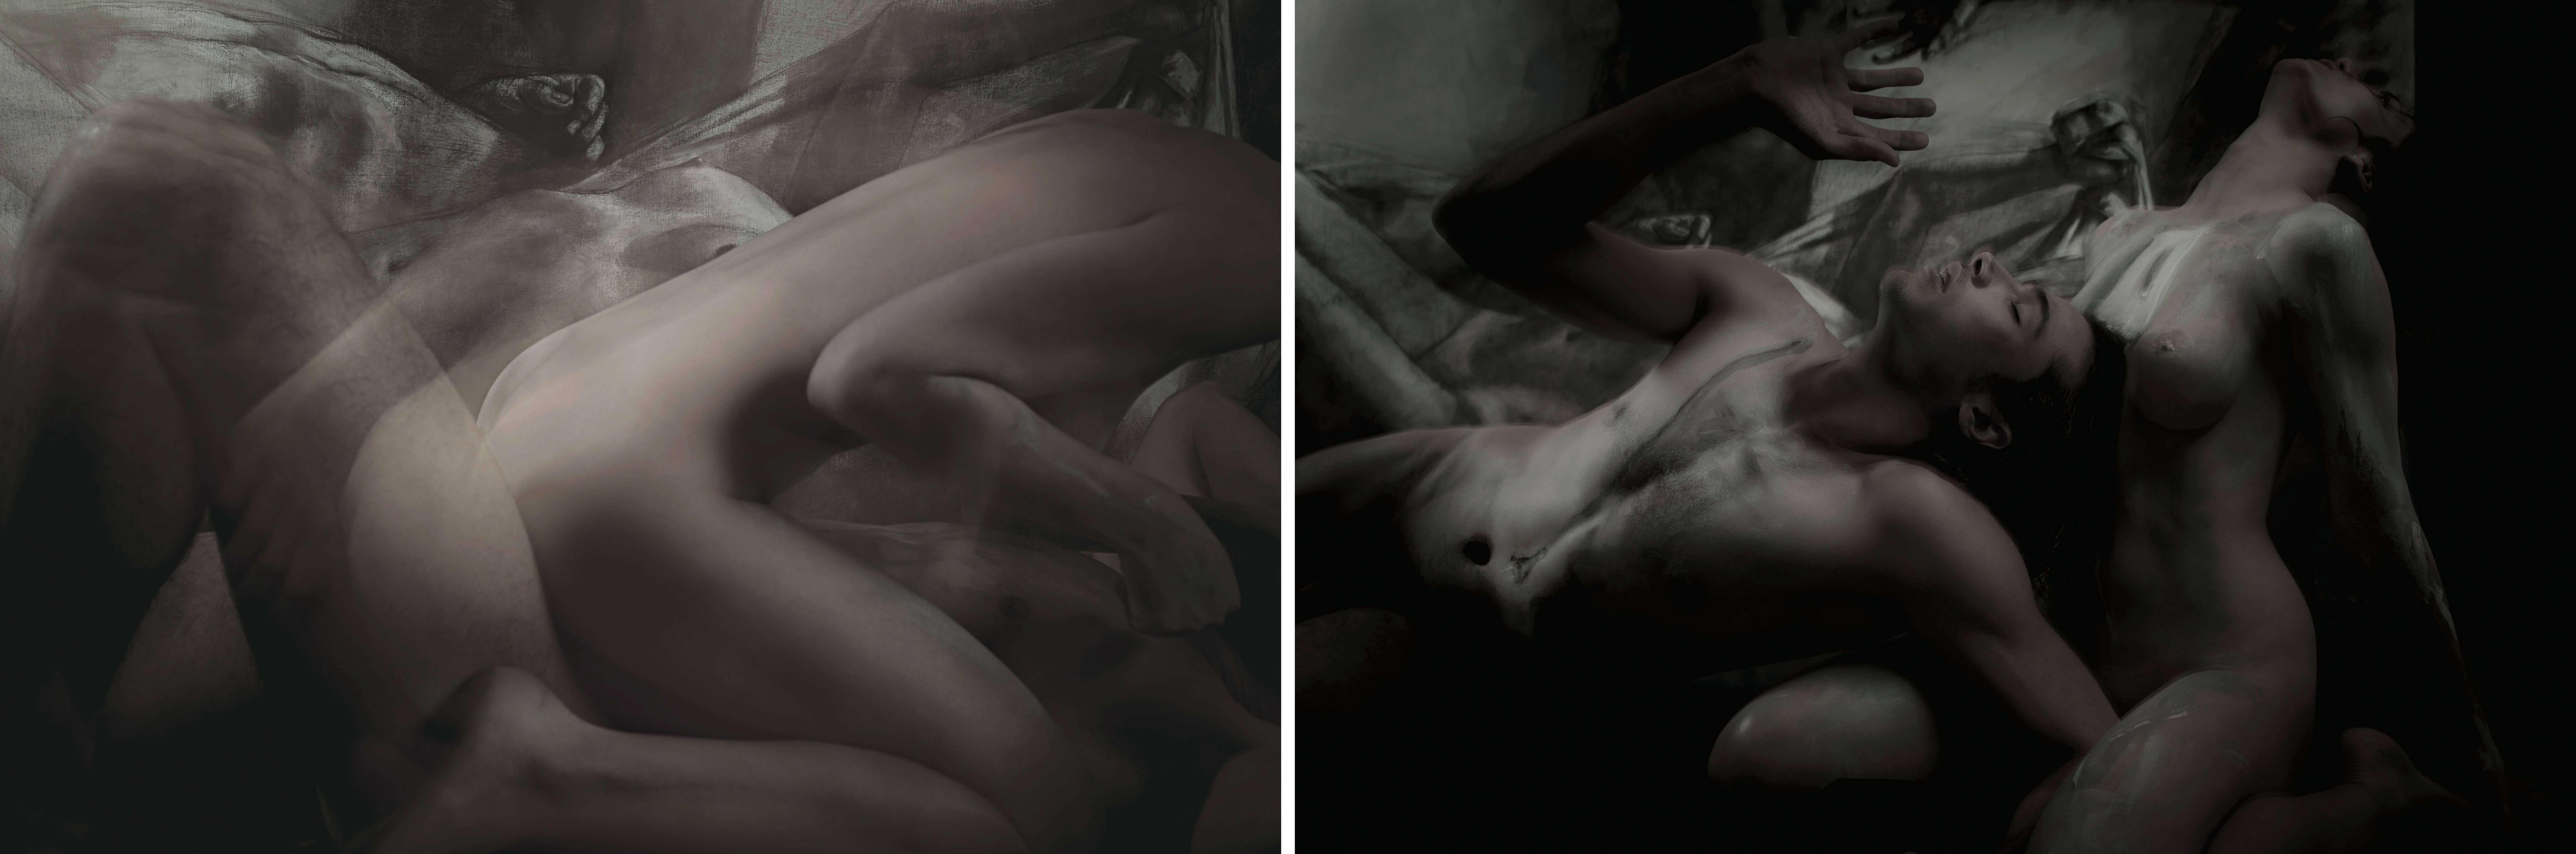 Mauricio Velez Color Photograph - Half Angels Half Demons #38 & #39 Figurative Nude. color photographs